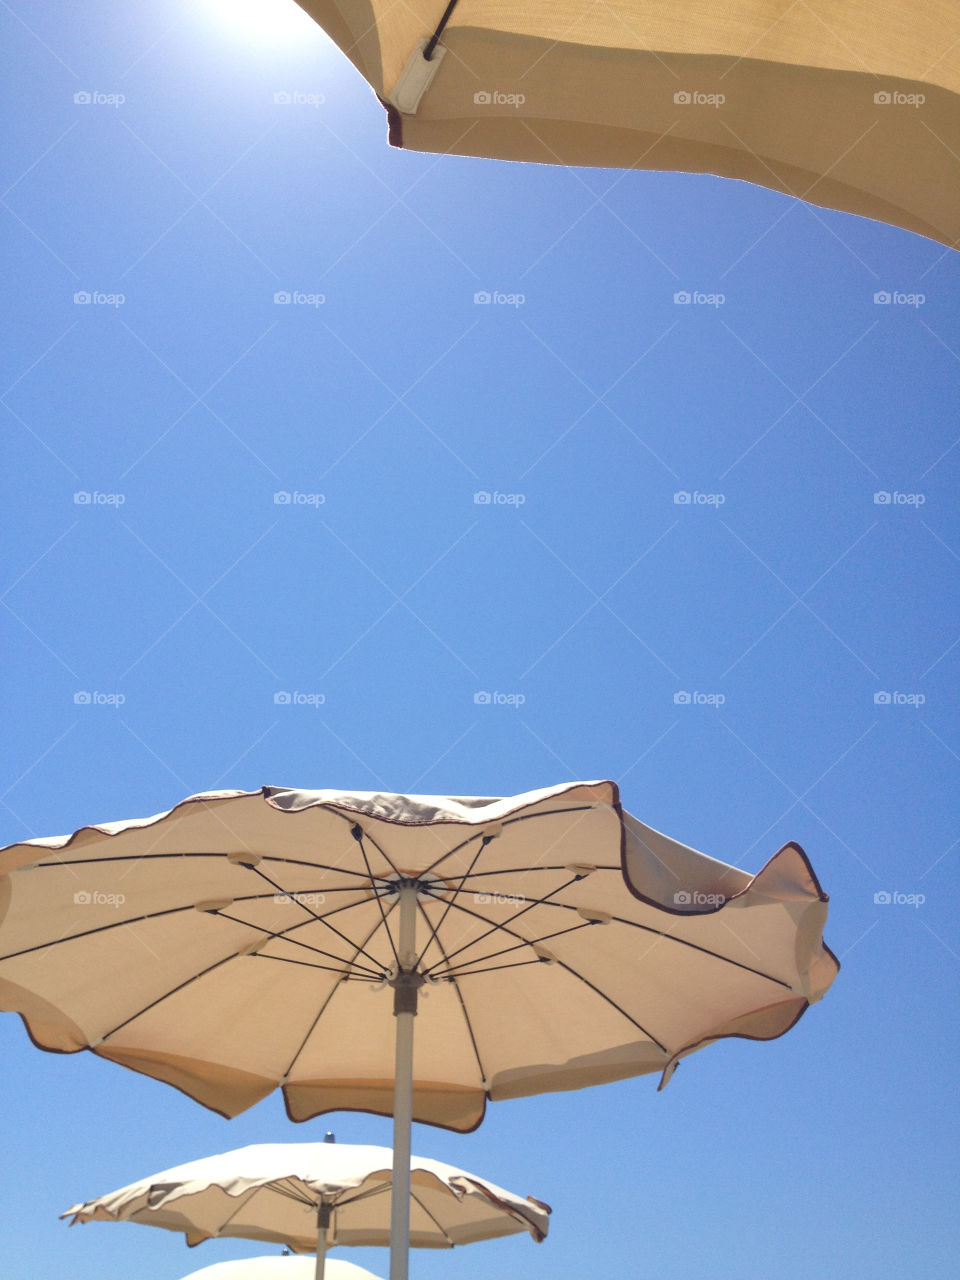 summer sun umbrella bluesky by paoletta75